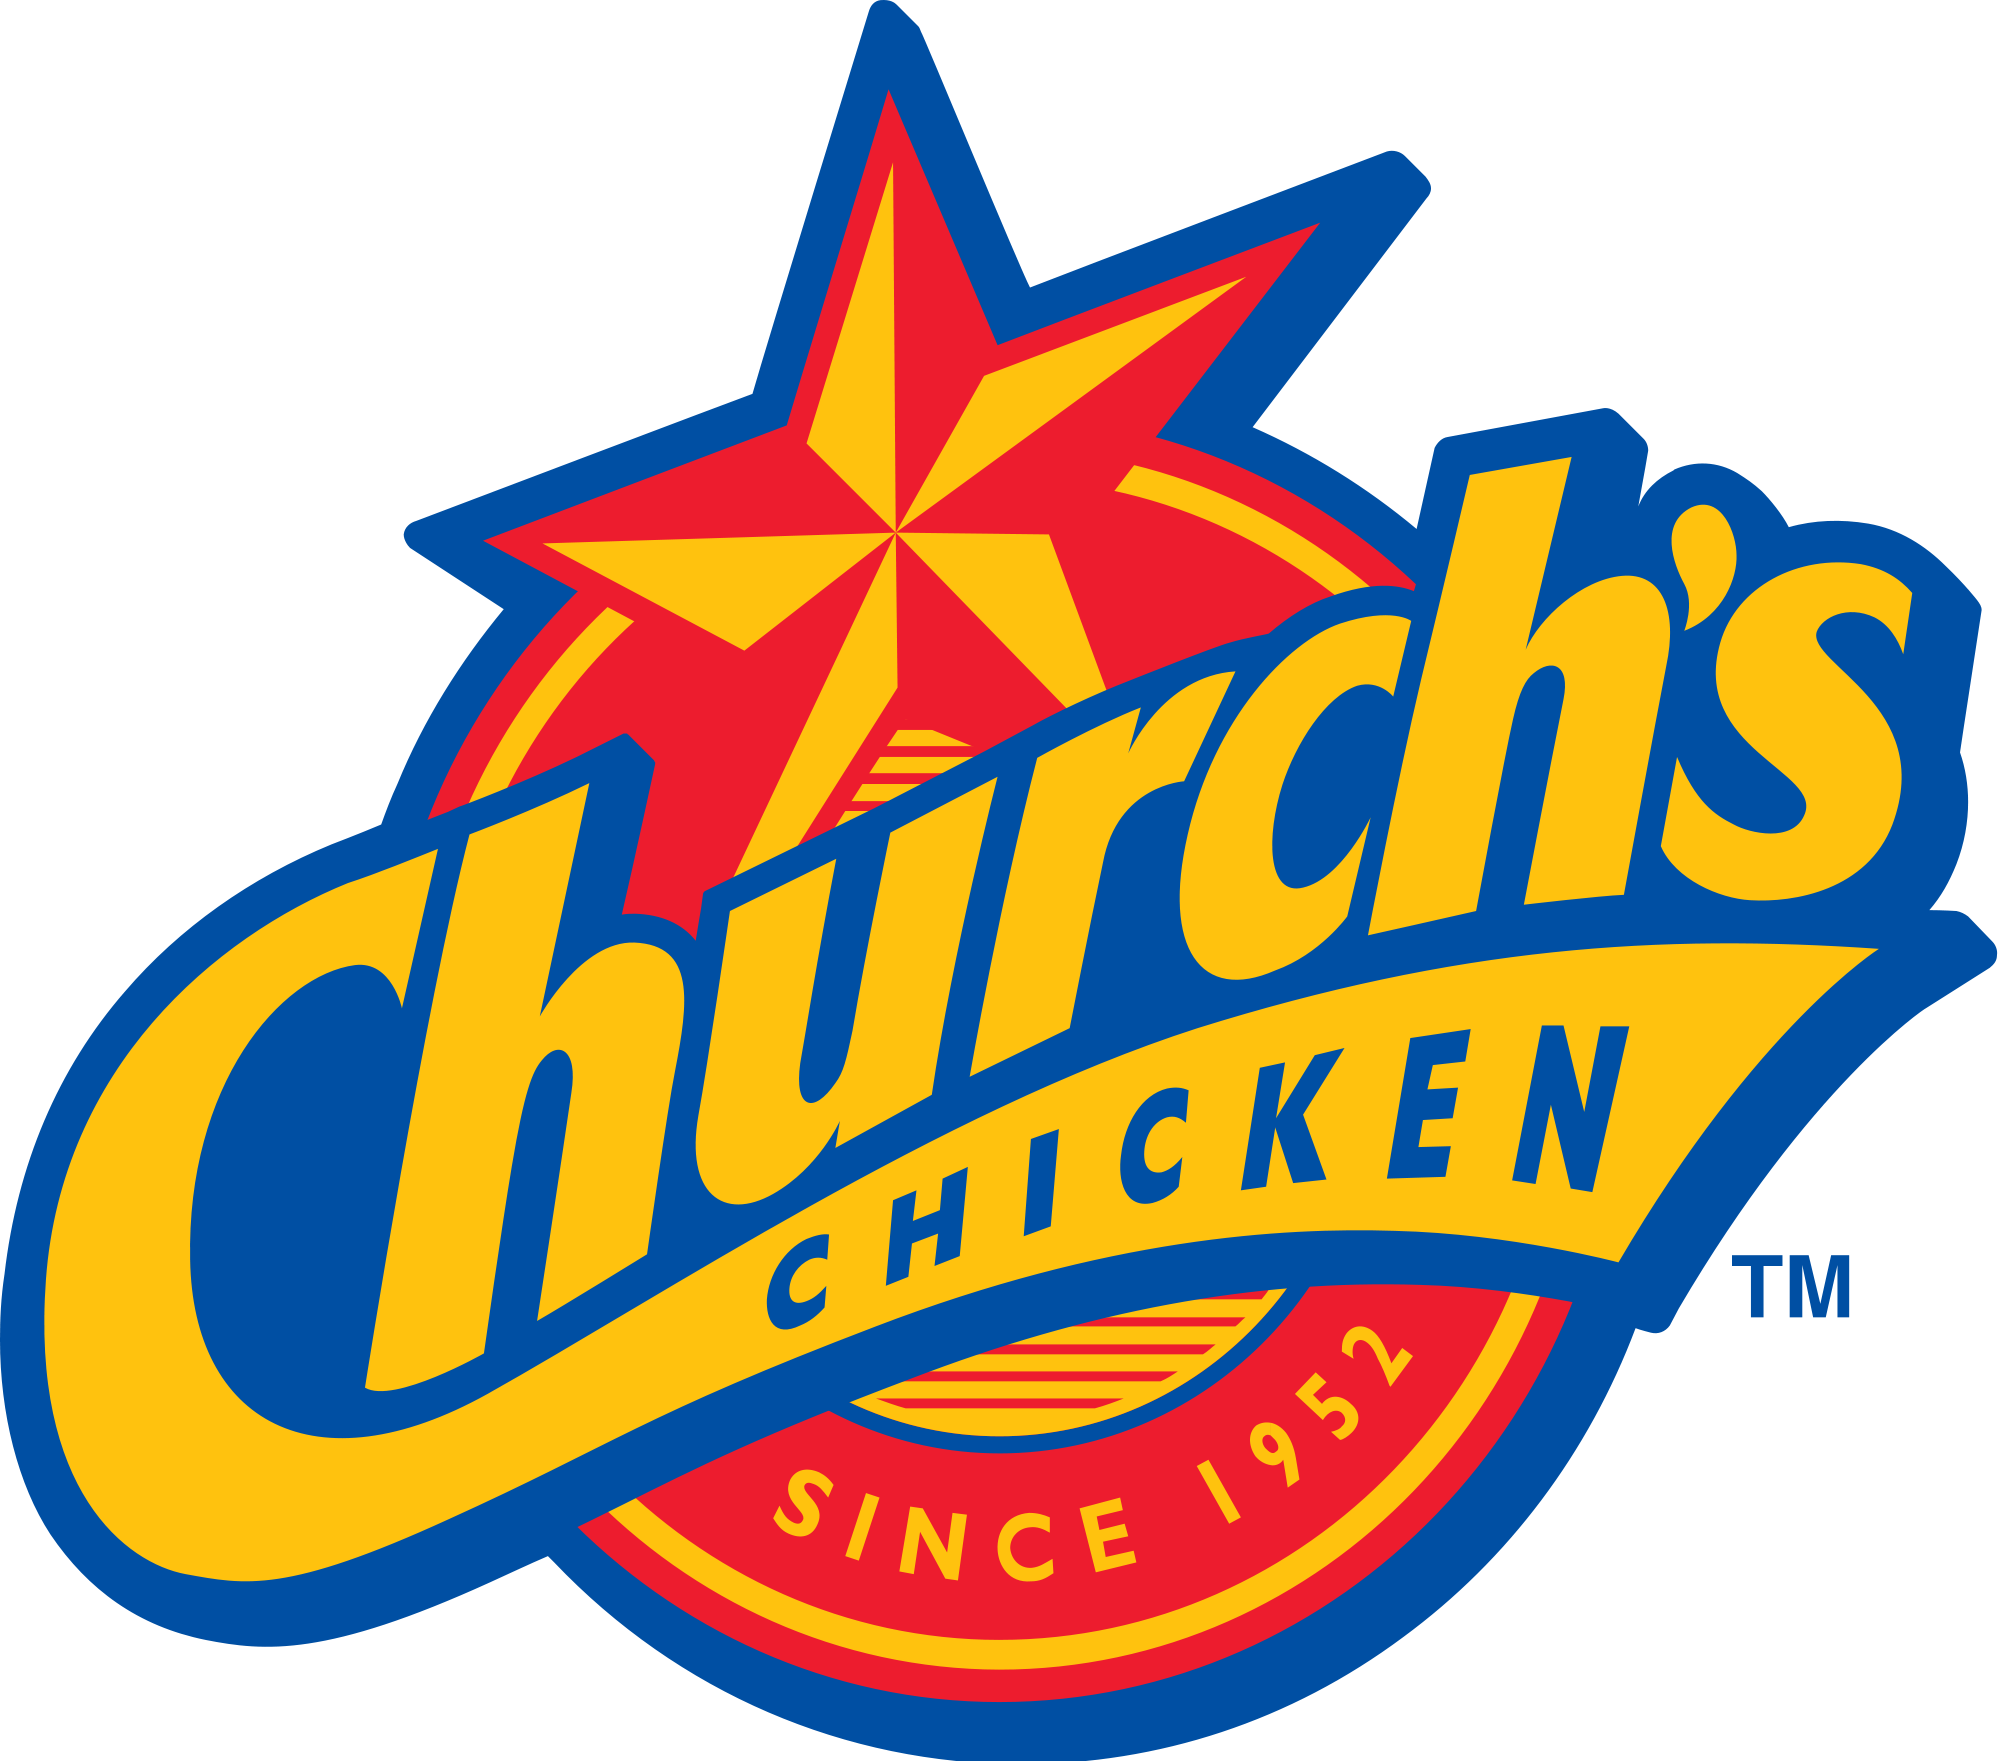 From Http Logos Wikia Com - Church's Chicken Logo Png (2000x1761)